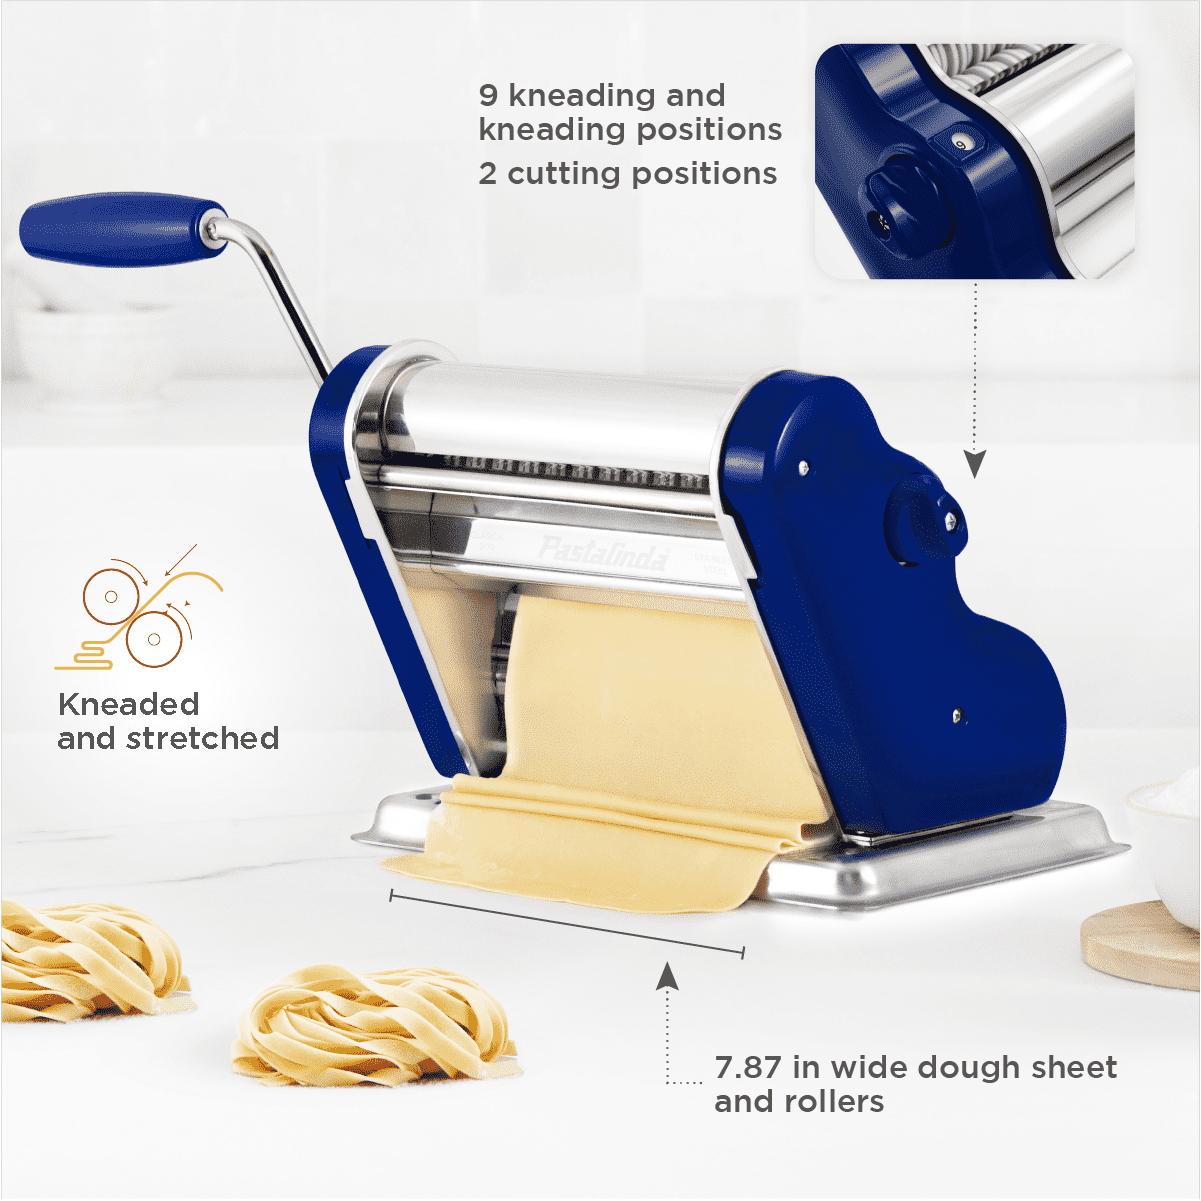 Pastalinda Classic 200 Navy Blue Pasta Maker Machine With Hand Crank And Two Clamps - Pastalinda